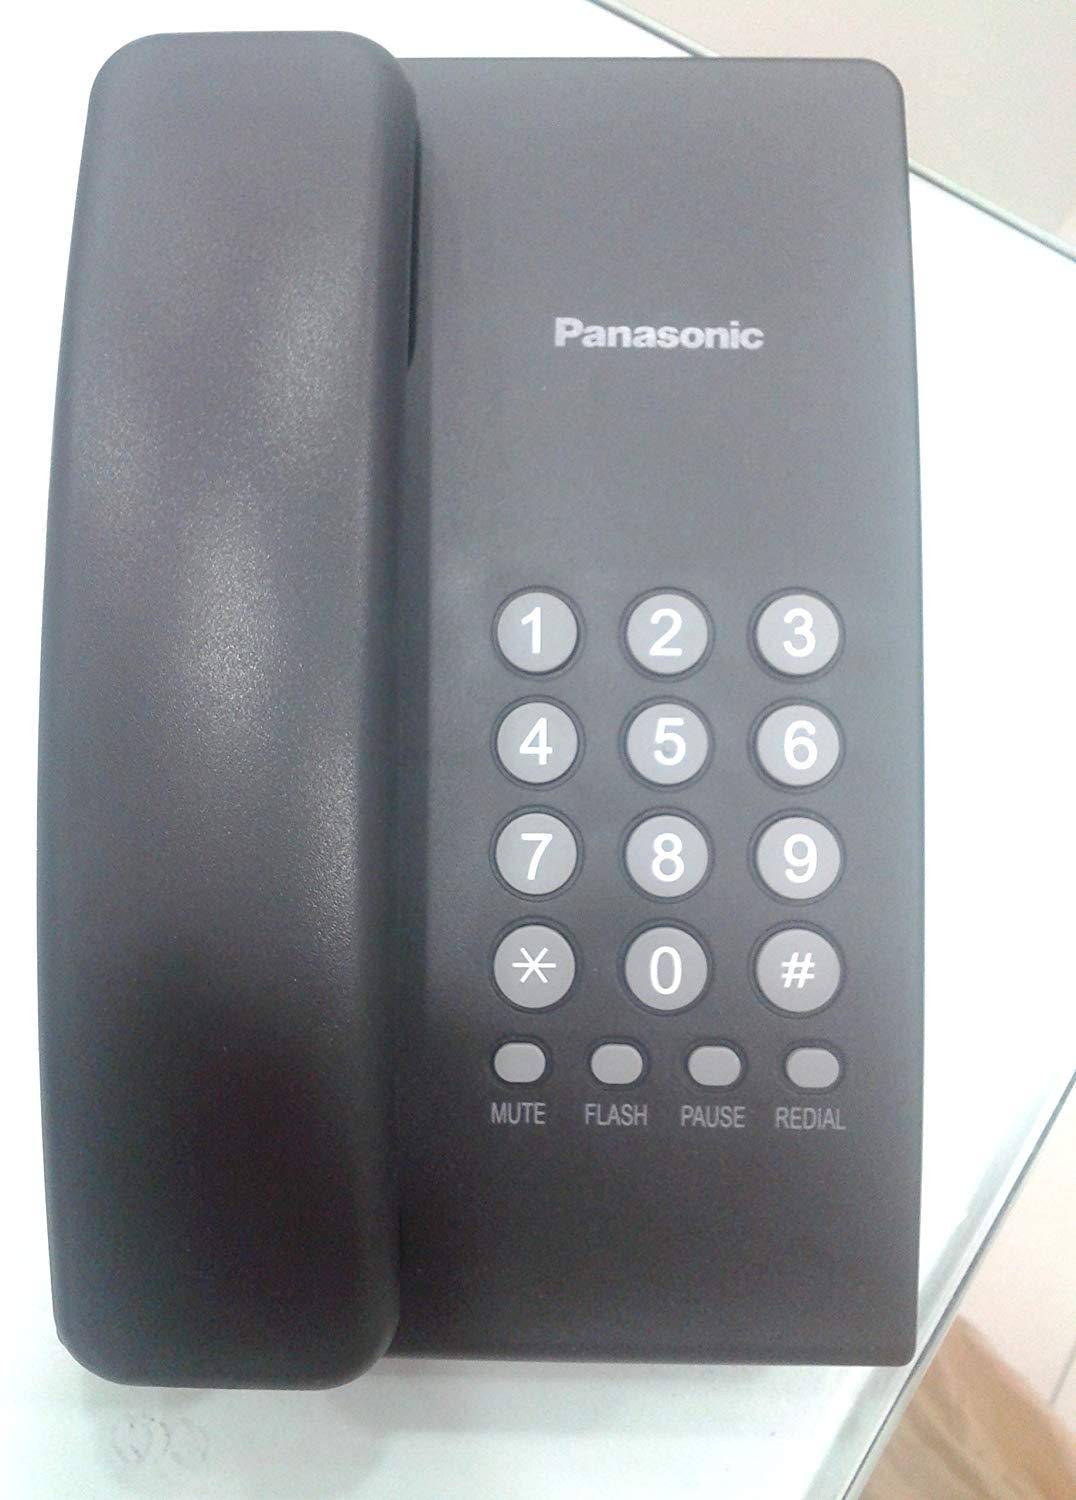 Panasonic INTEGRATED TELEPHONE SYSTEM Corded Landline Phone zoom image